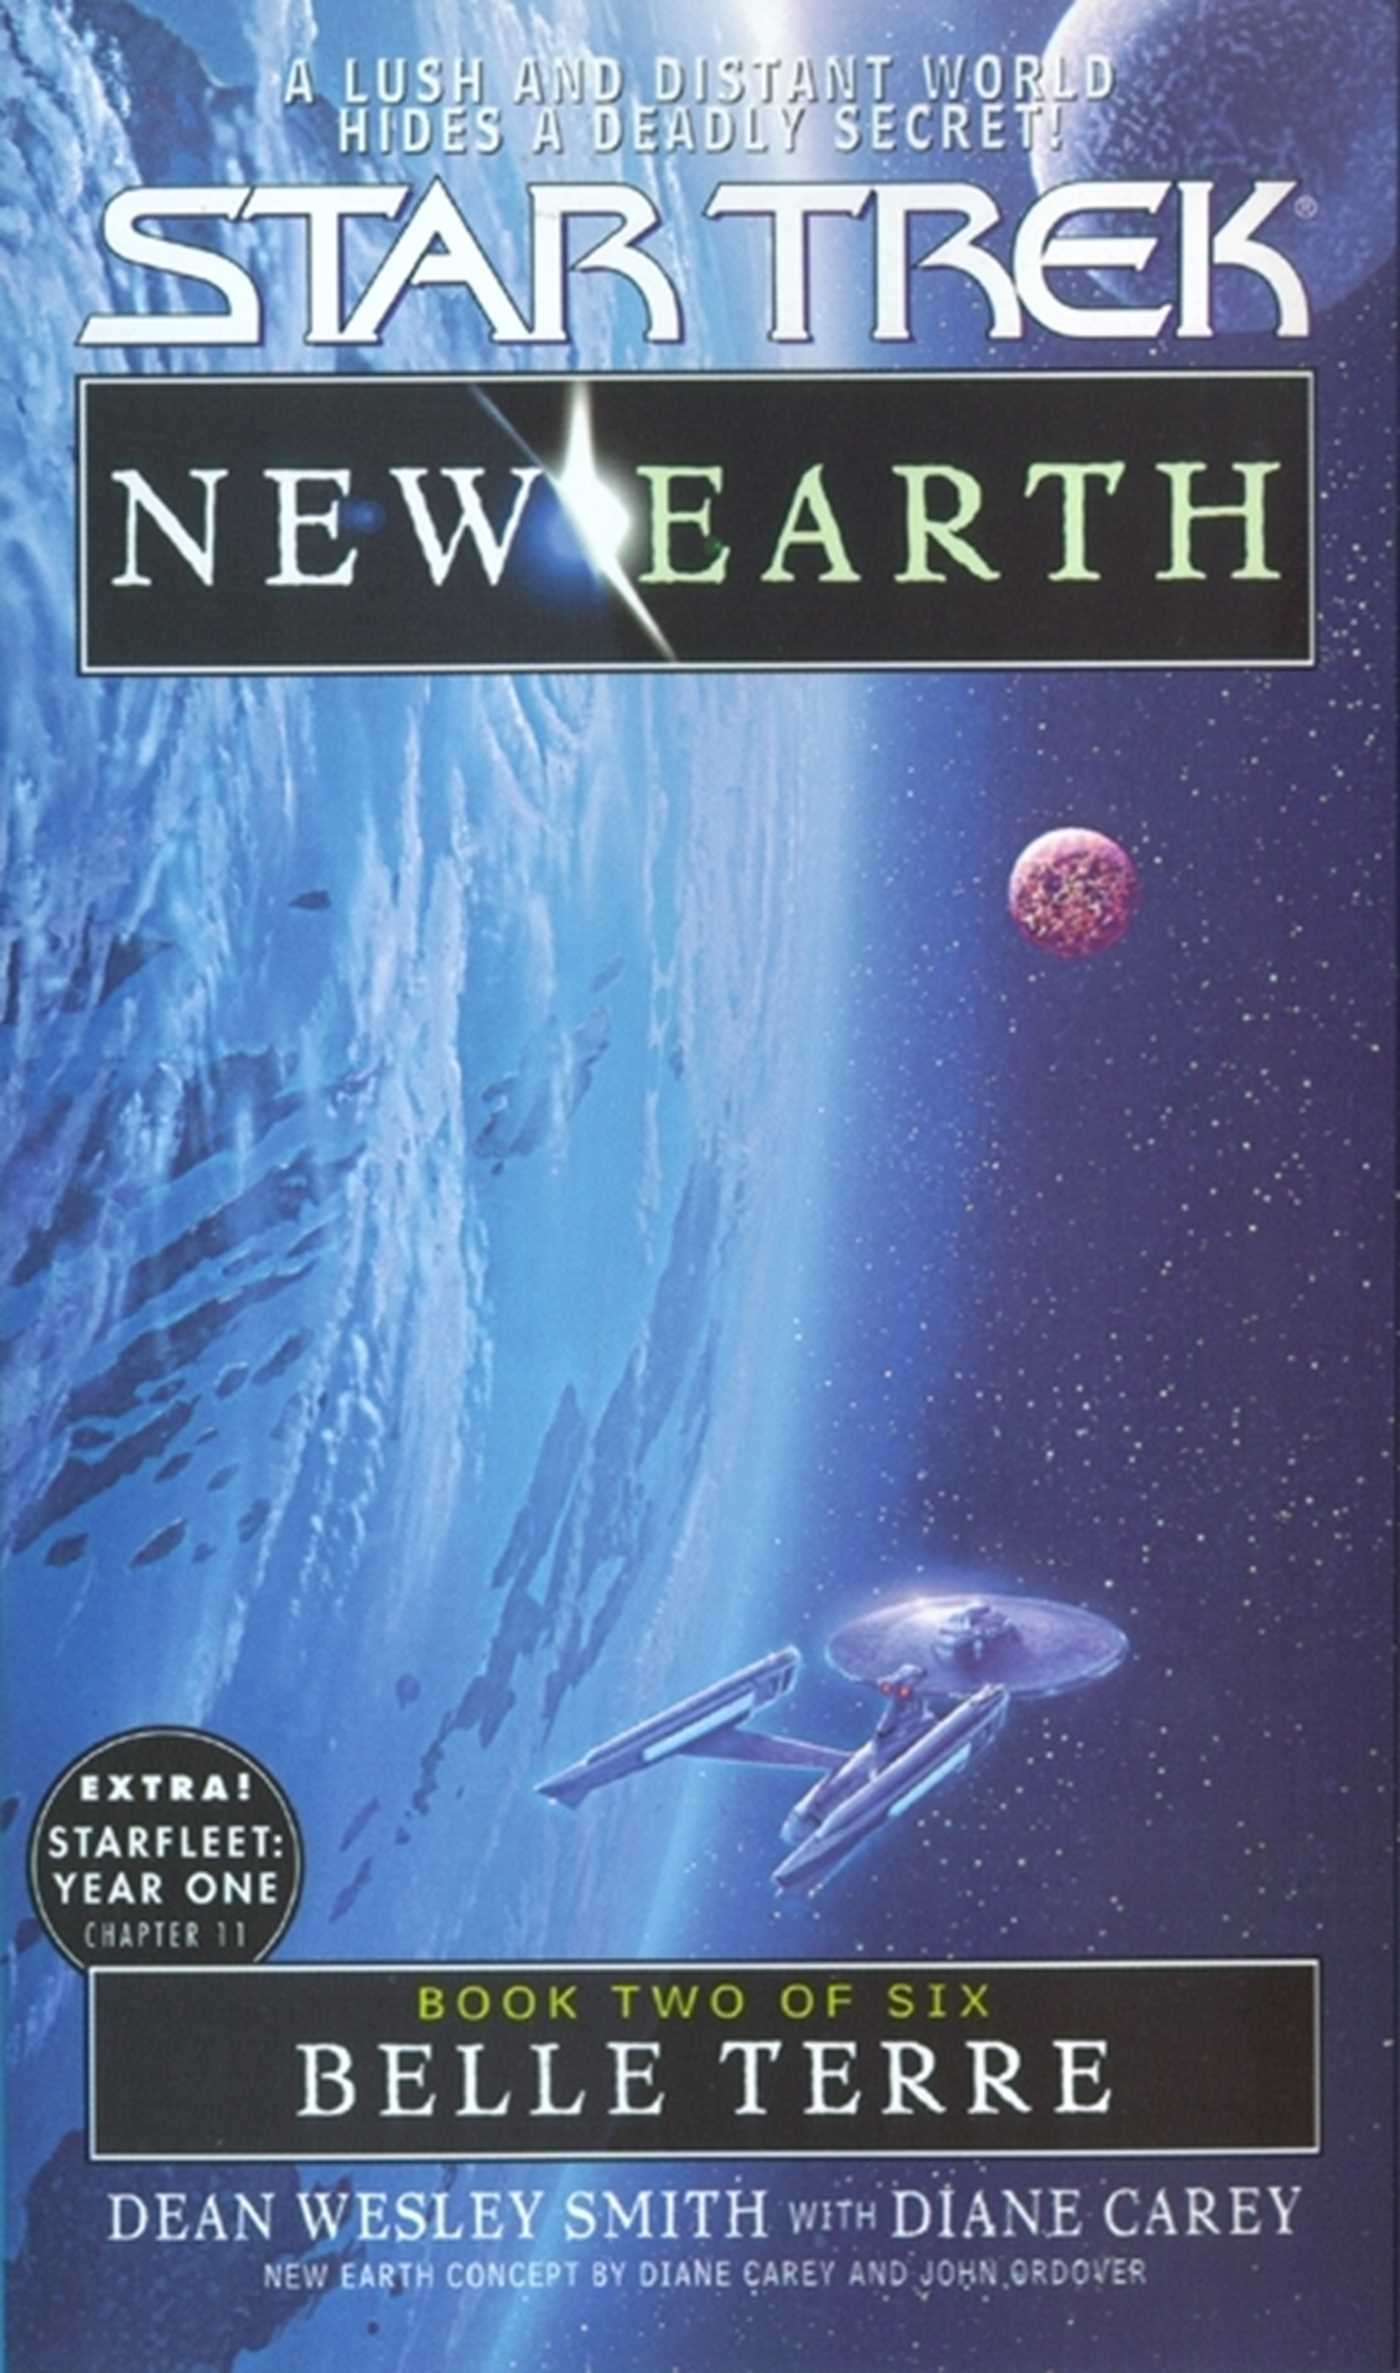 “Star Trek: New Earth: Book 2: Belle Terre” Review by Trek Lit Reviews